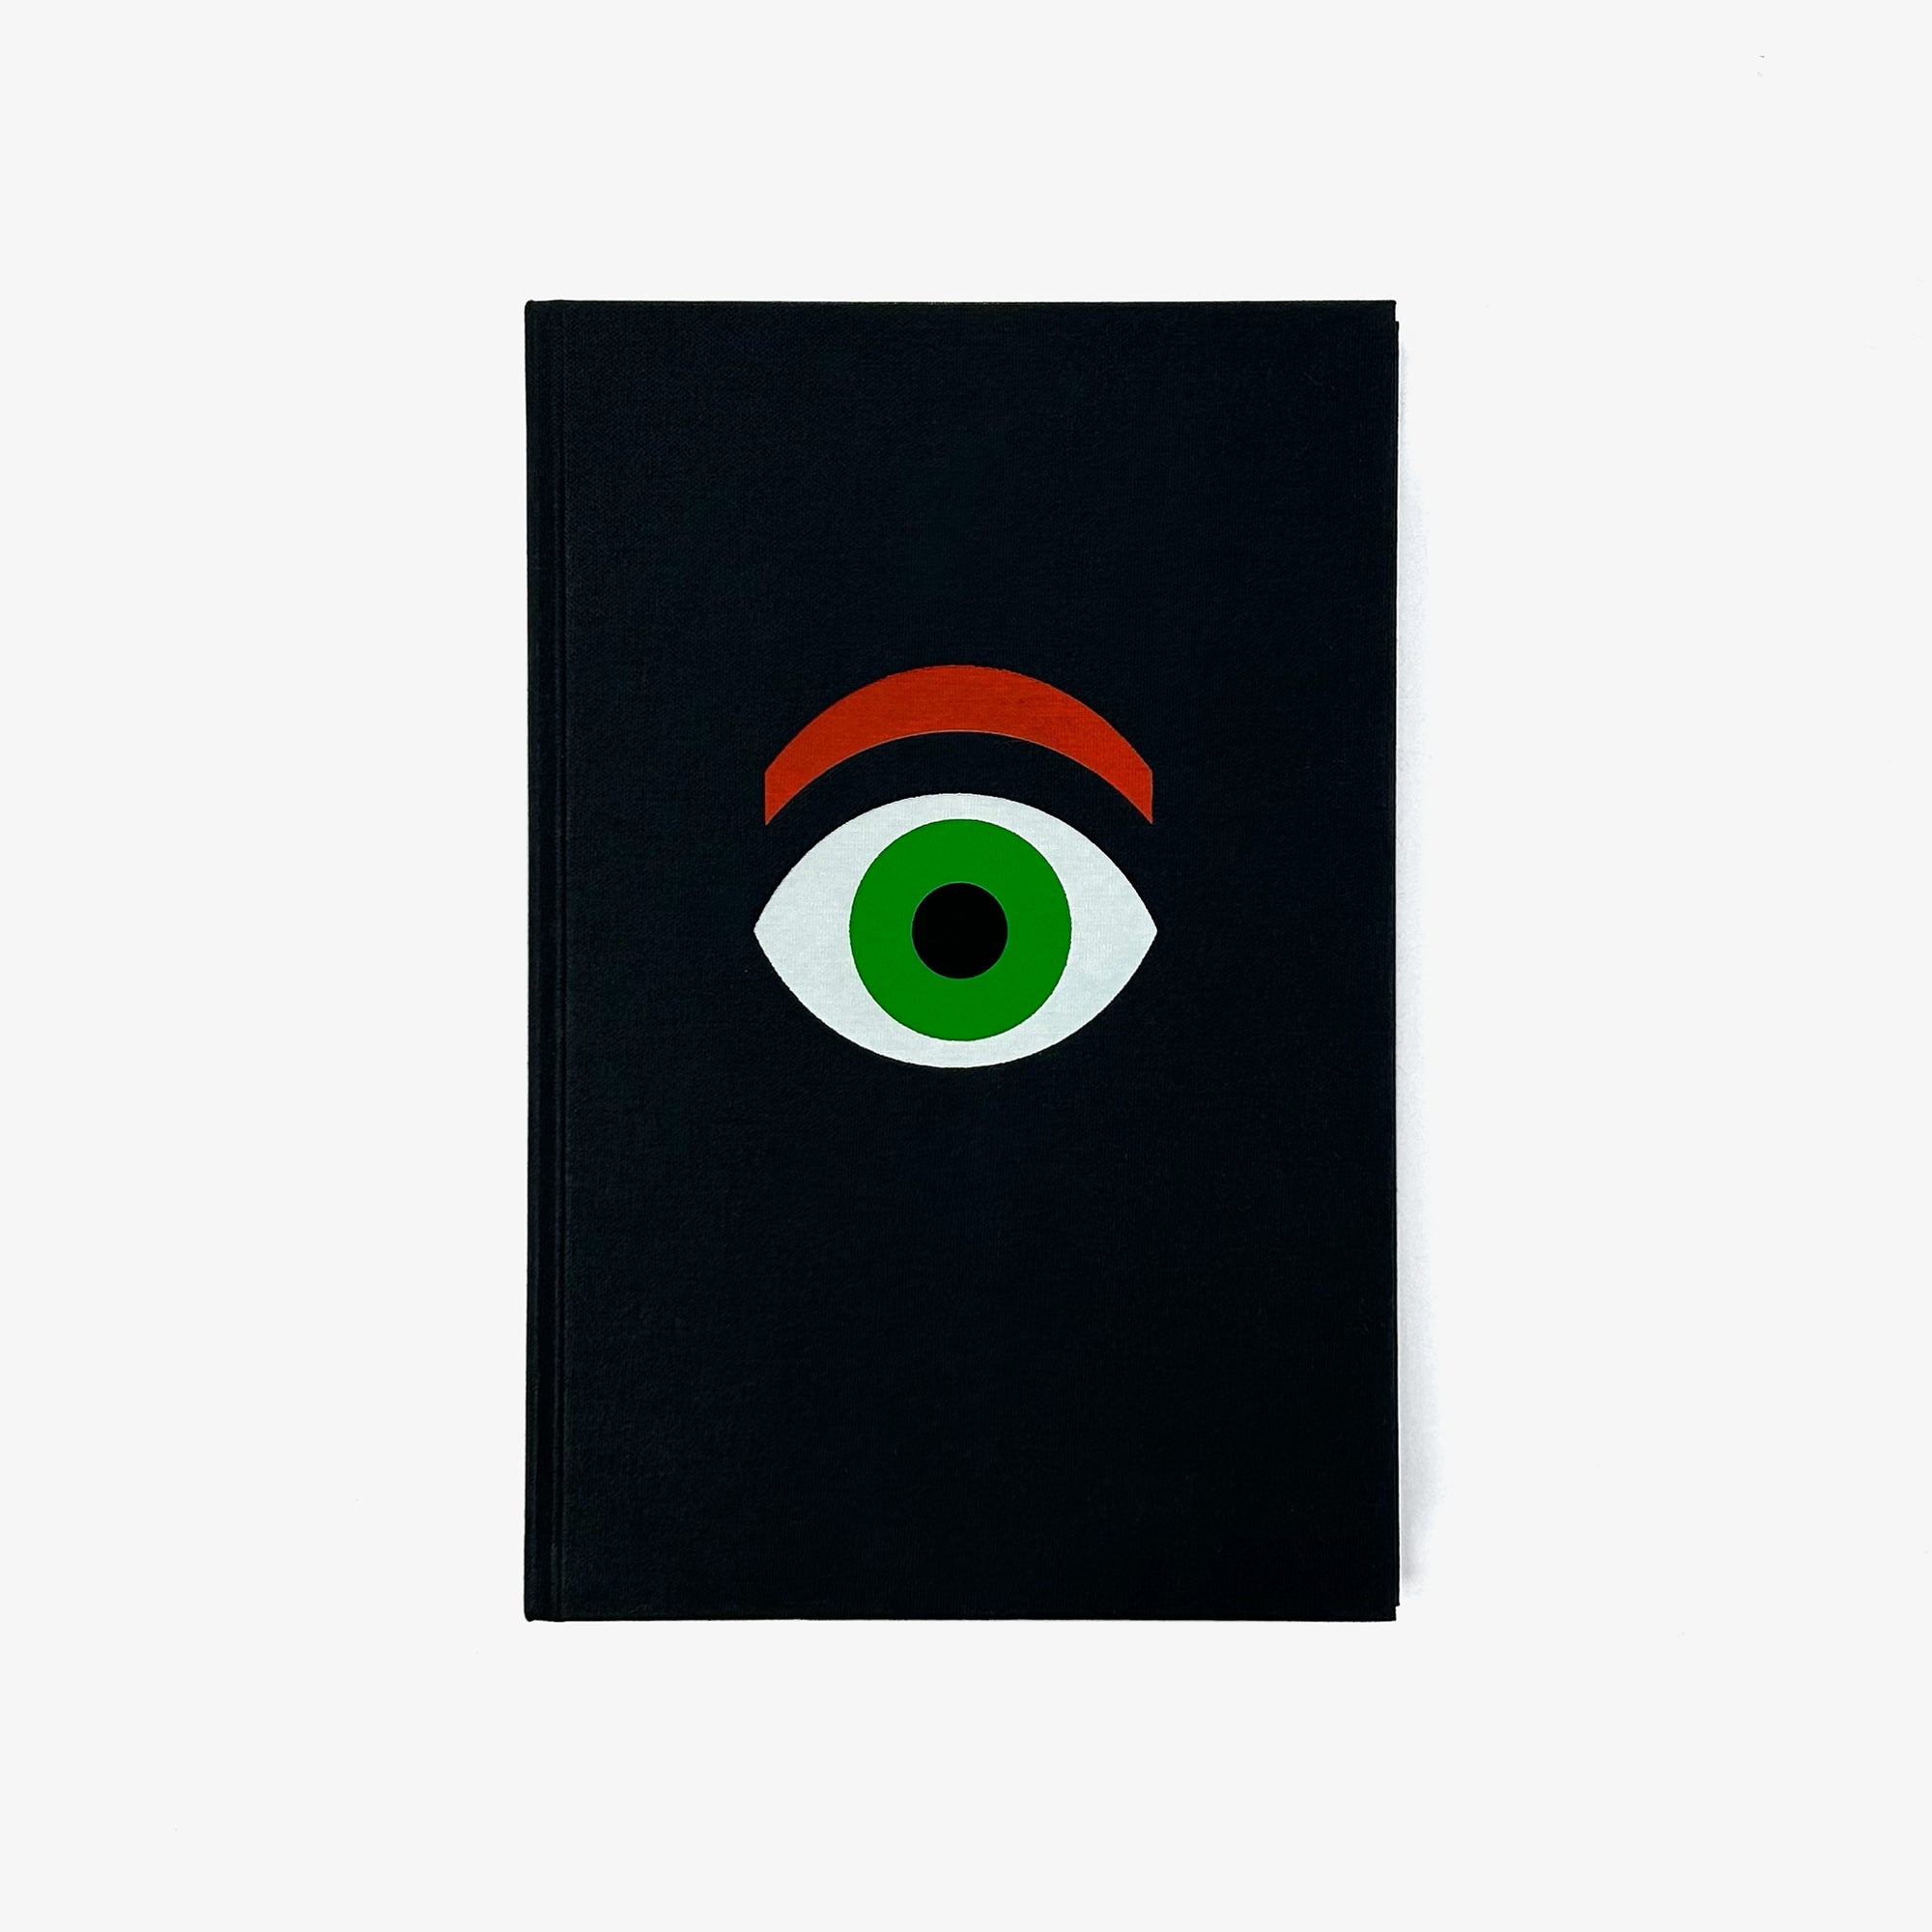 Paul Rand: A Designer’s Eye